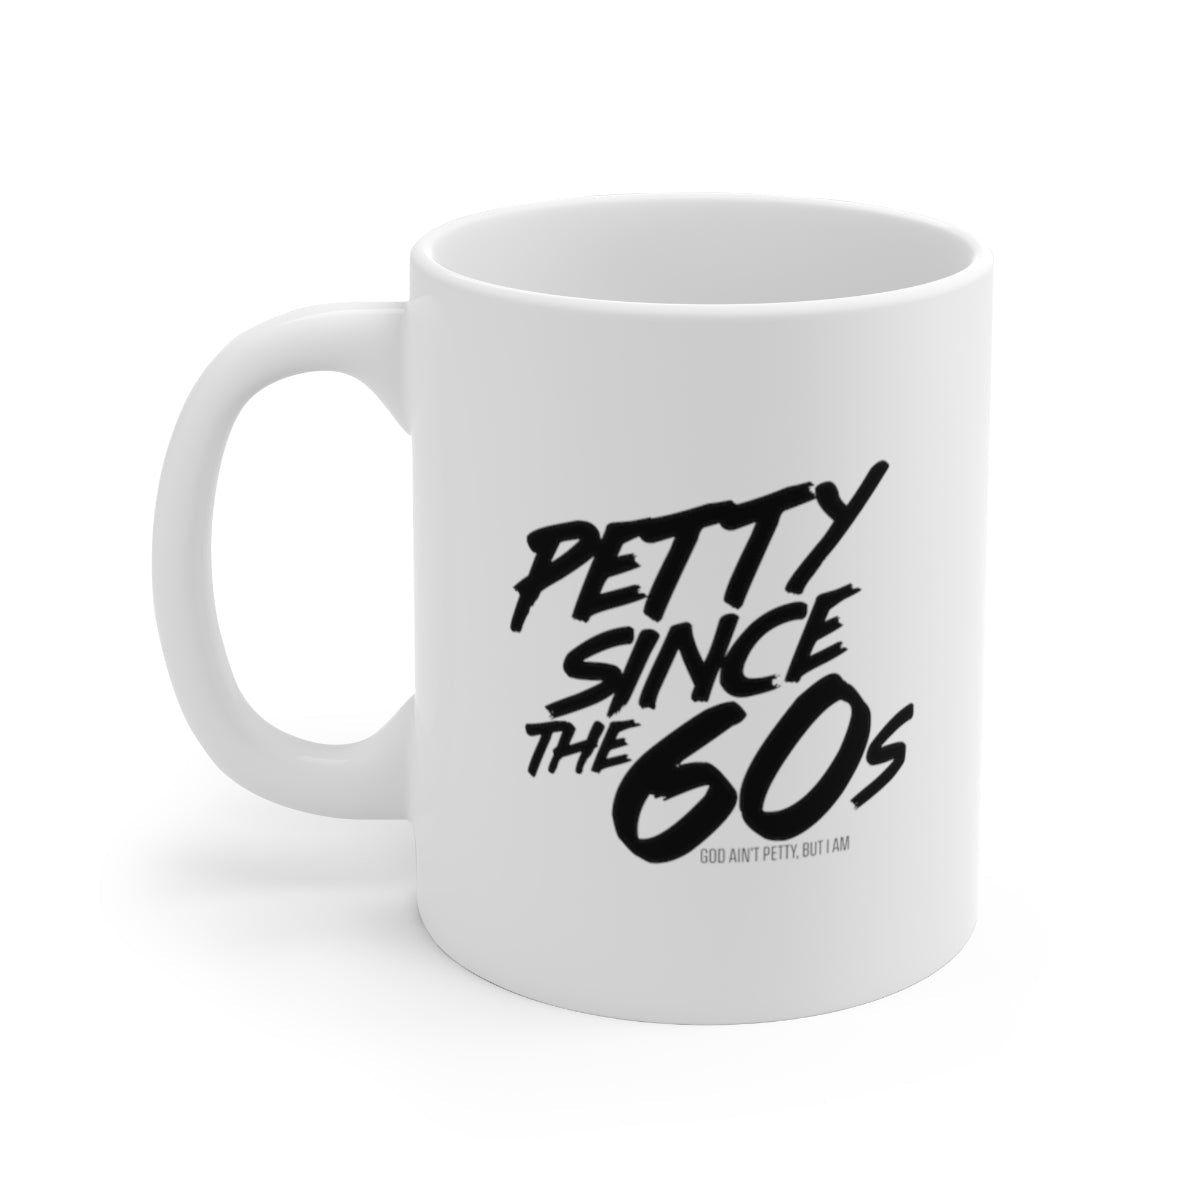 Petty Since the 60s Mug 11oz (White/Black)-Mug-The Original God Ain't Petty But I Am